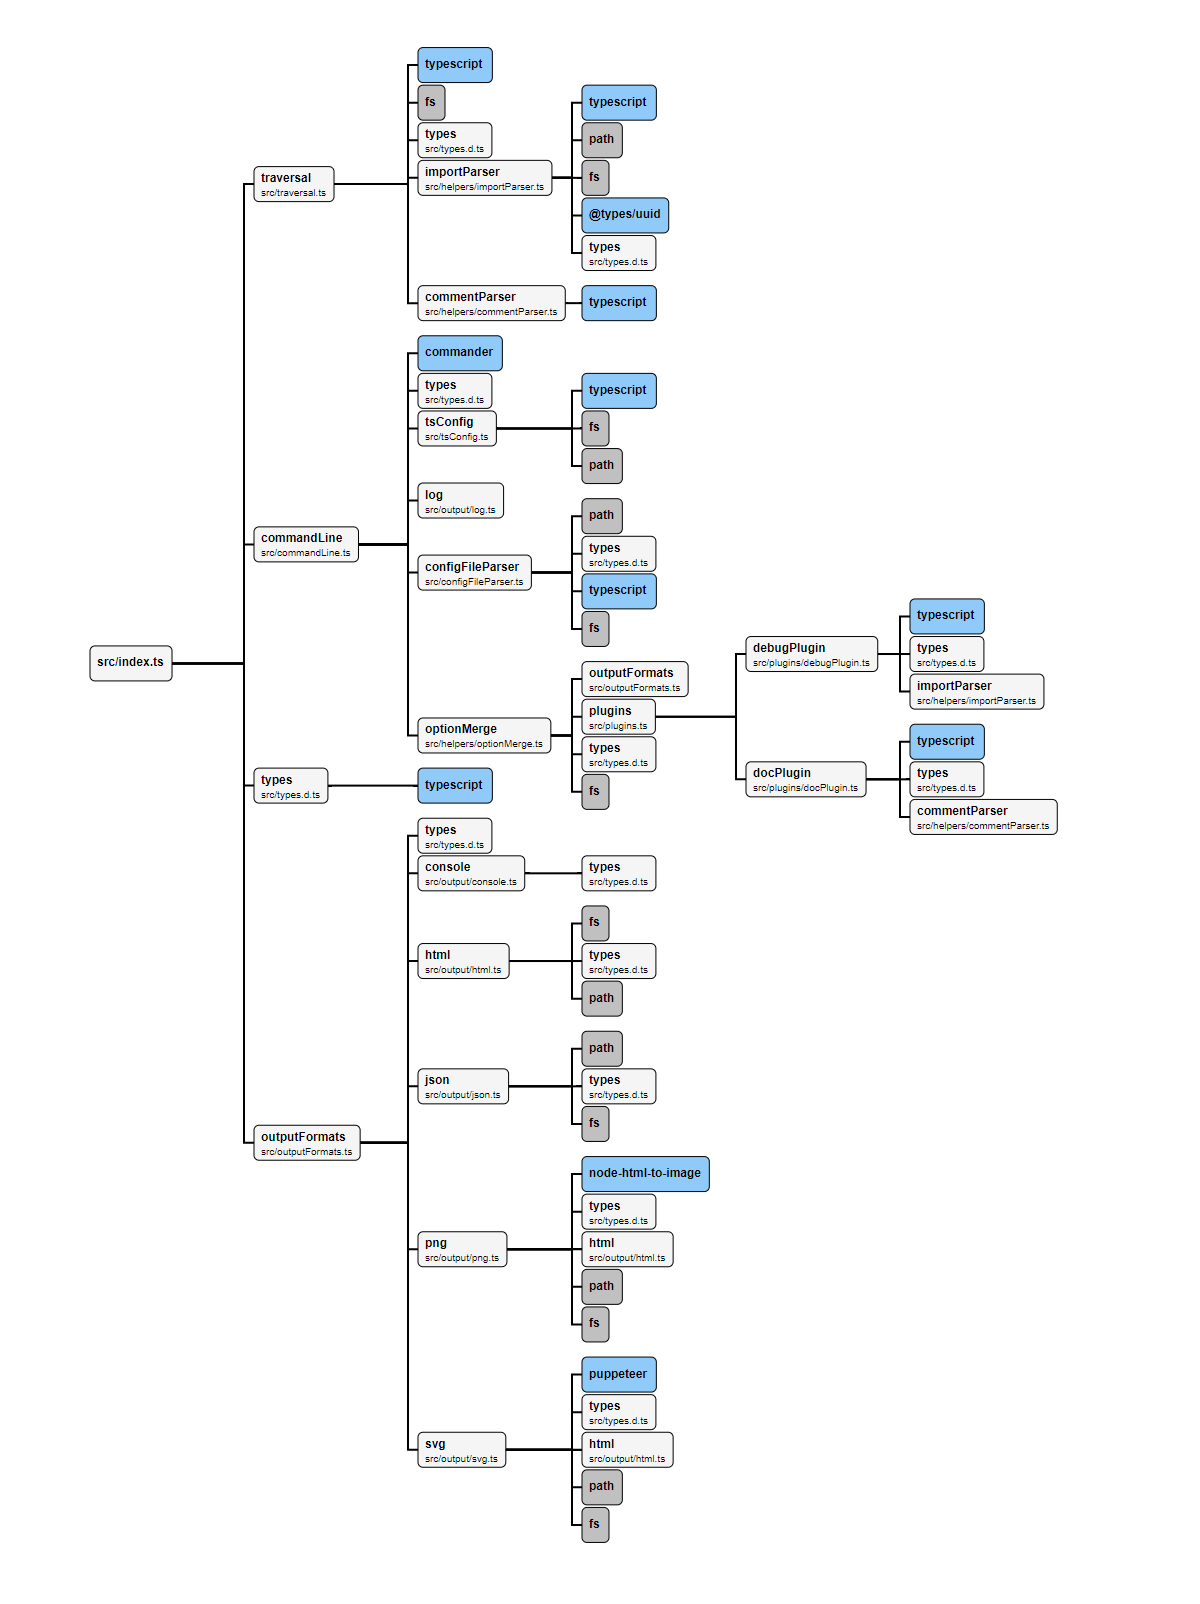 Dependency Tree of ts-insp tool